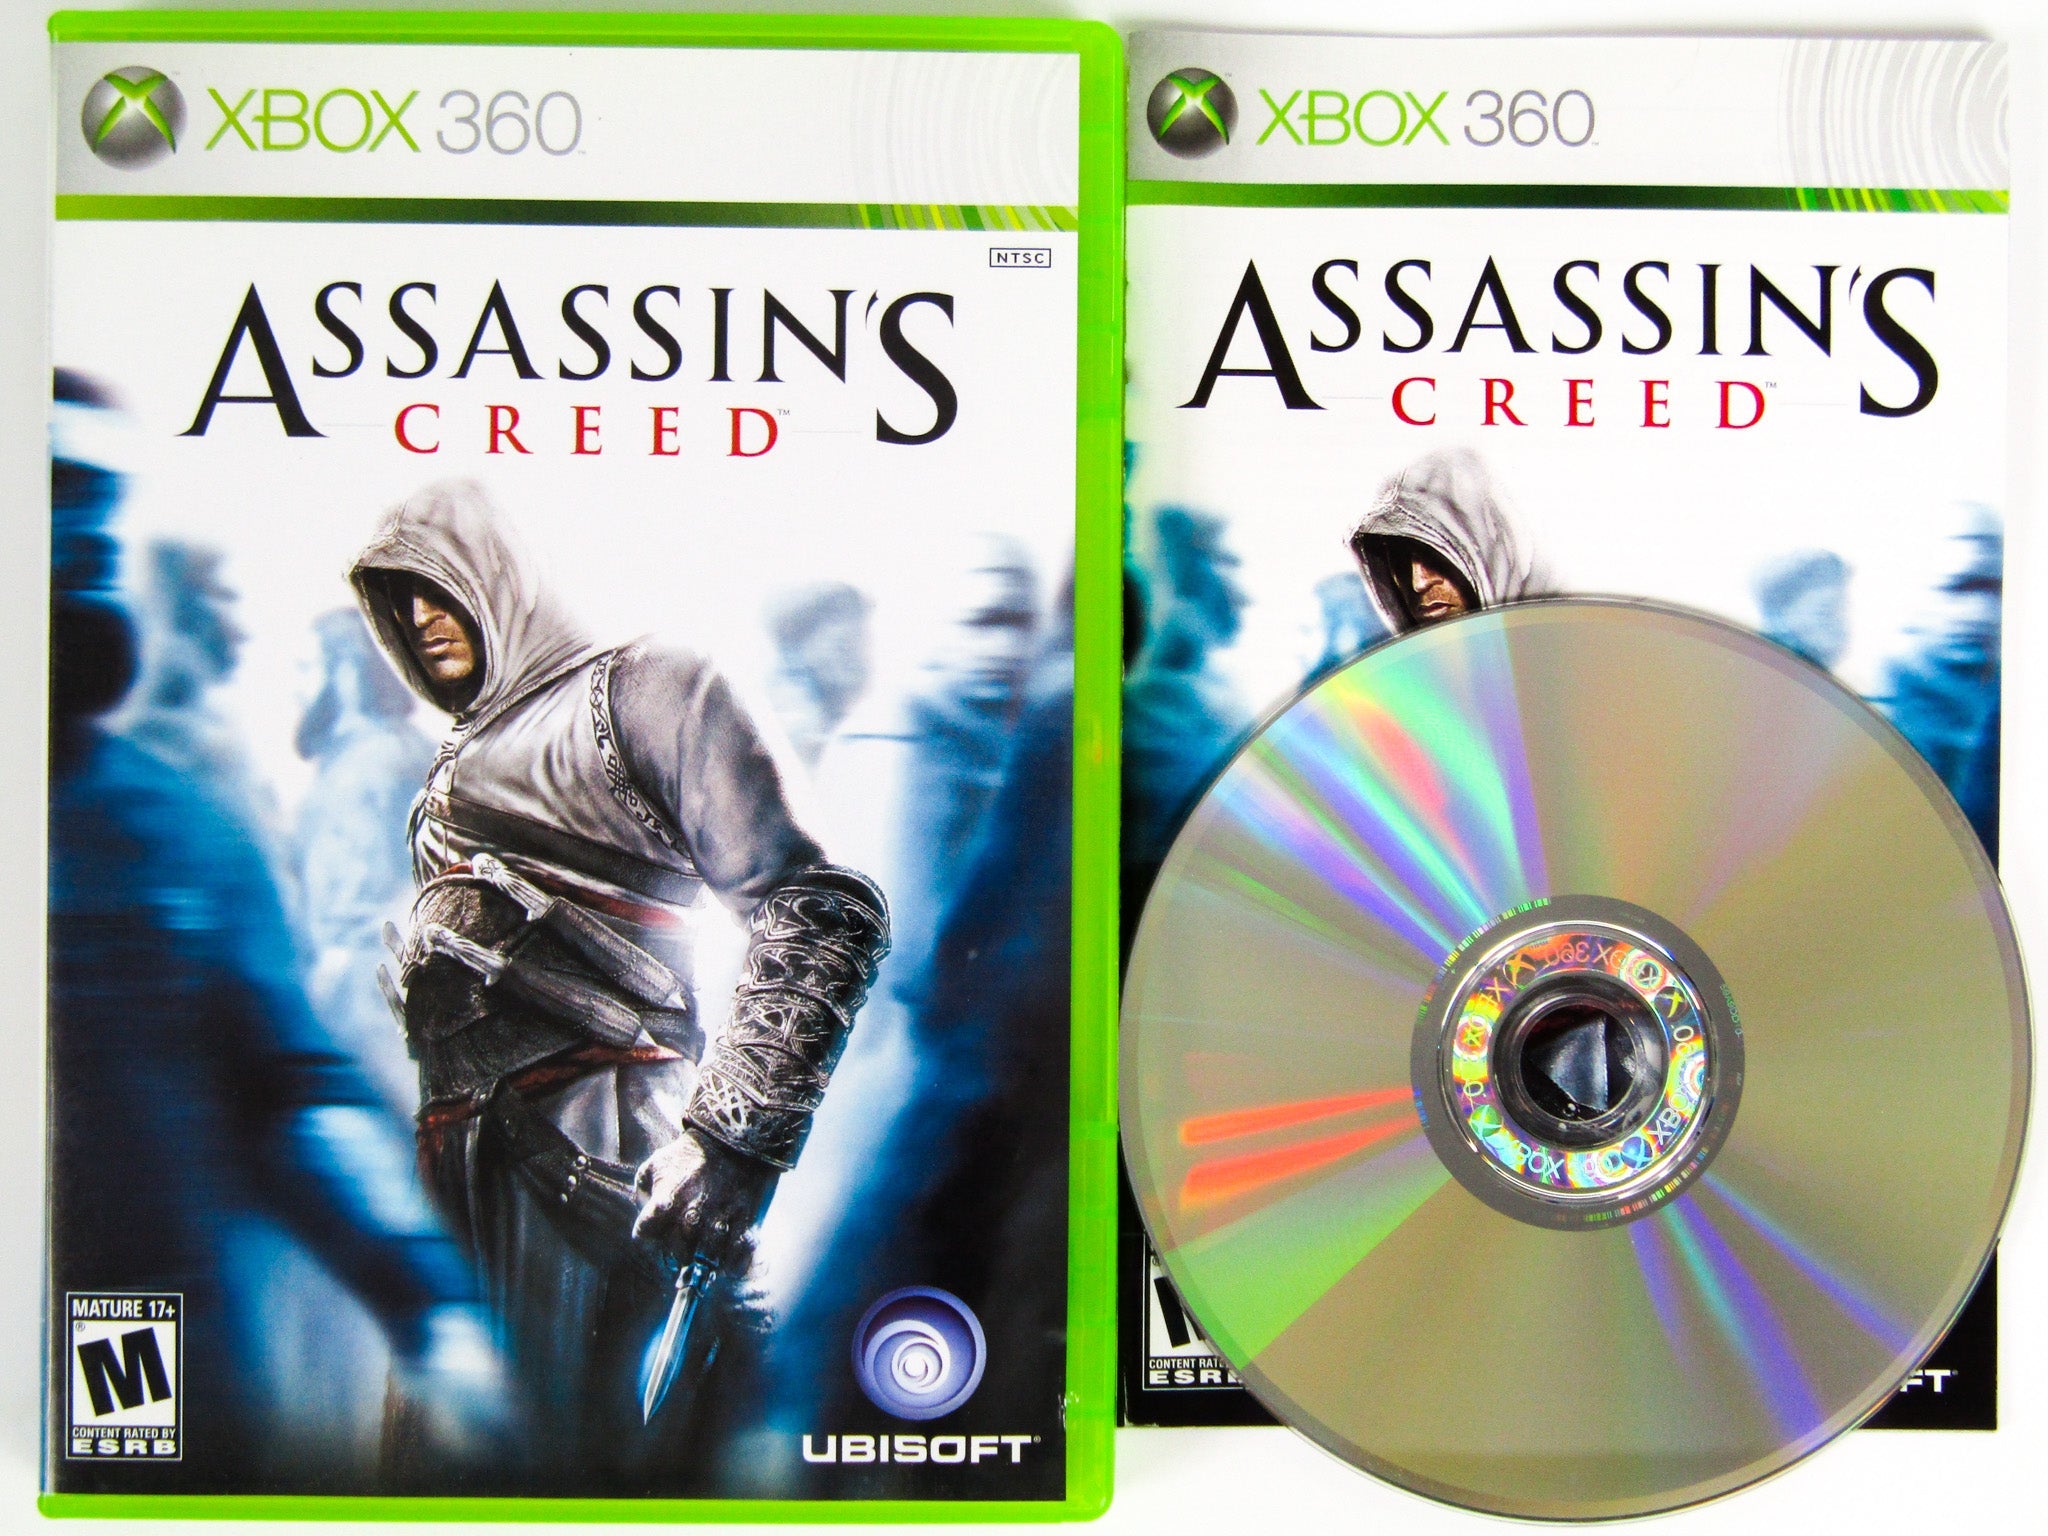 Jogo Assassin's Creed (AC 1) (ASSASSINS CREED 1) - Xbox 360 (USADO) -  Tabular Games